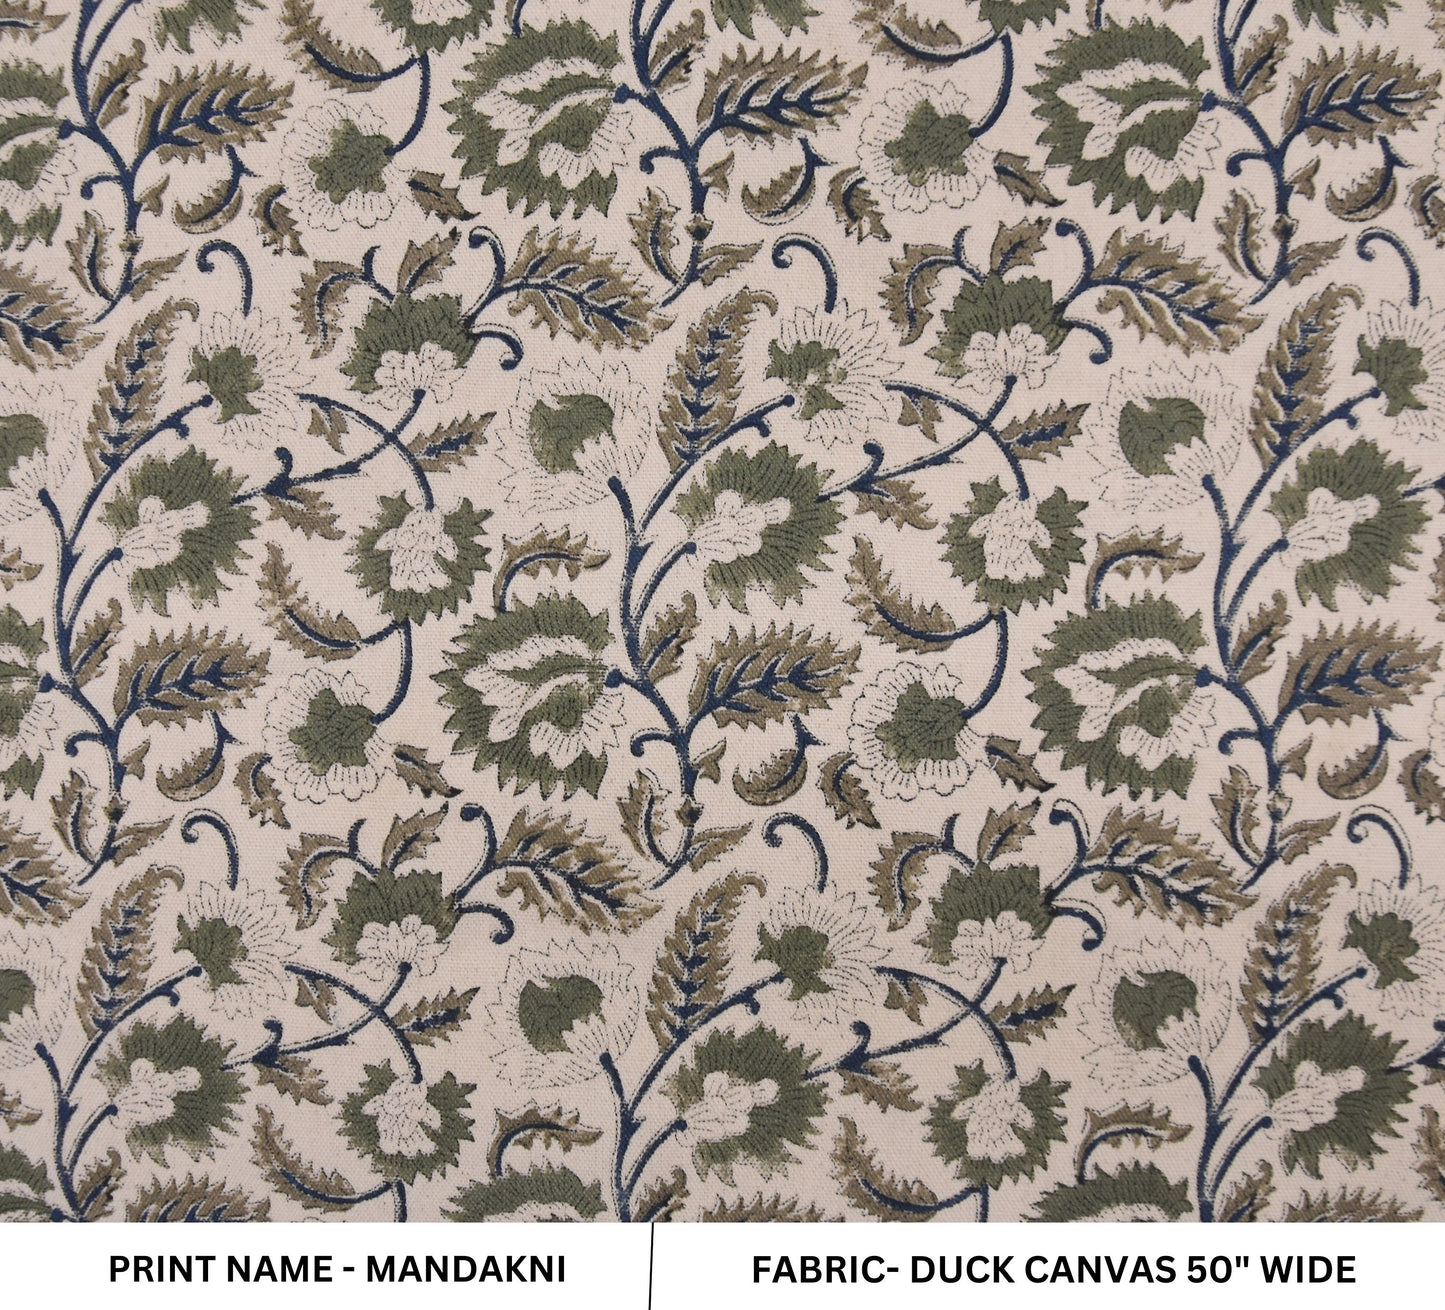 Hand Block Duck Canvas 50" Wide Fabric Handmade Block Print Indian Cushion Cover Curtains and Napkins - MANDAKINI